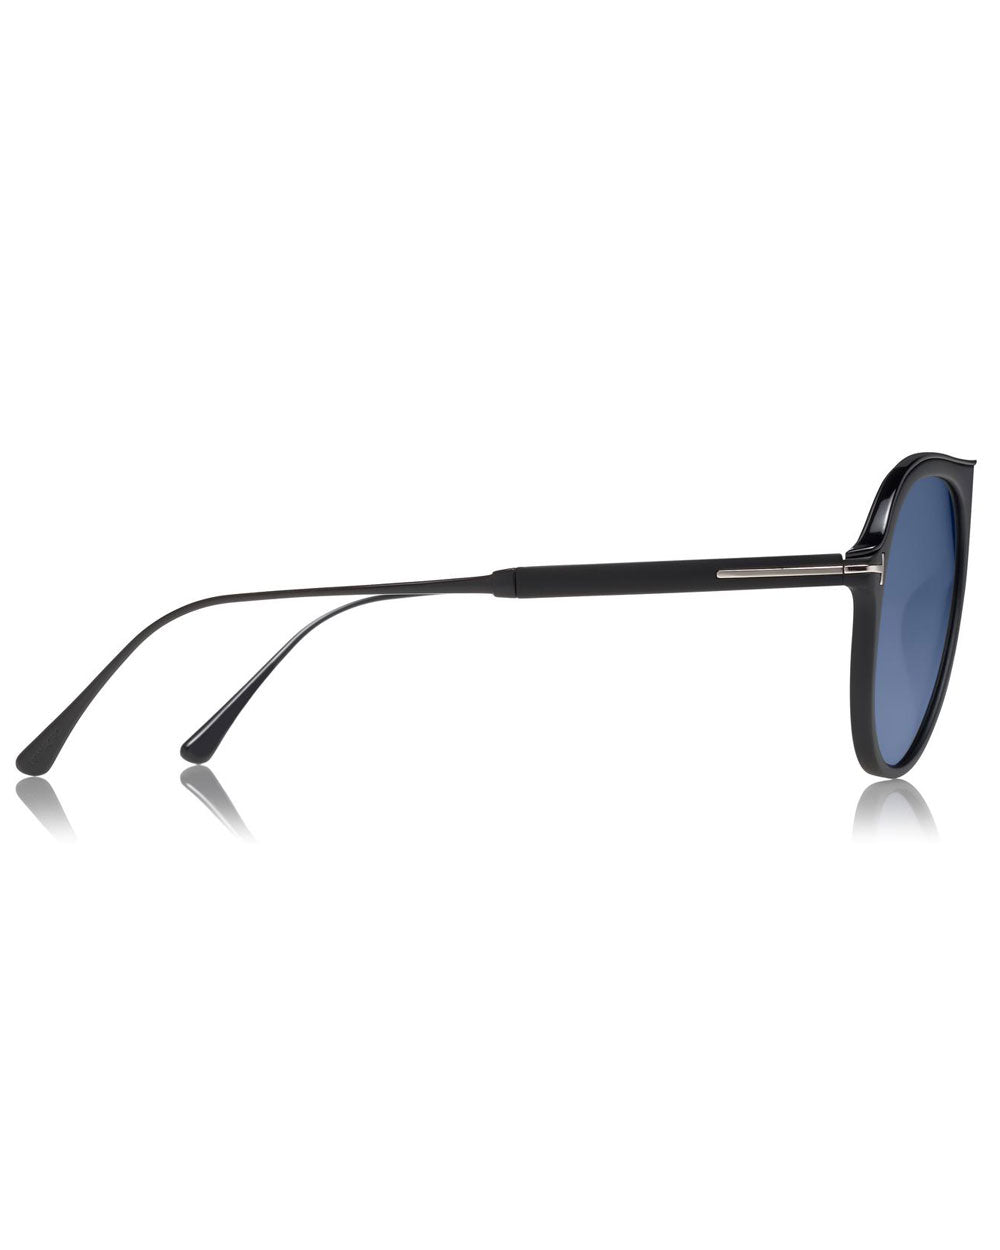 Polarized Nicholai Sunglasses in Black